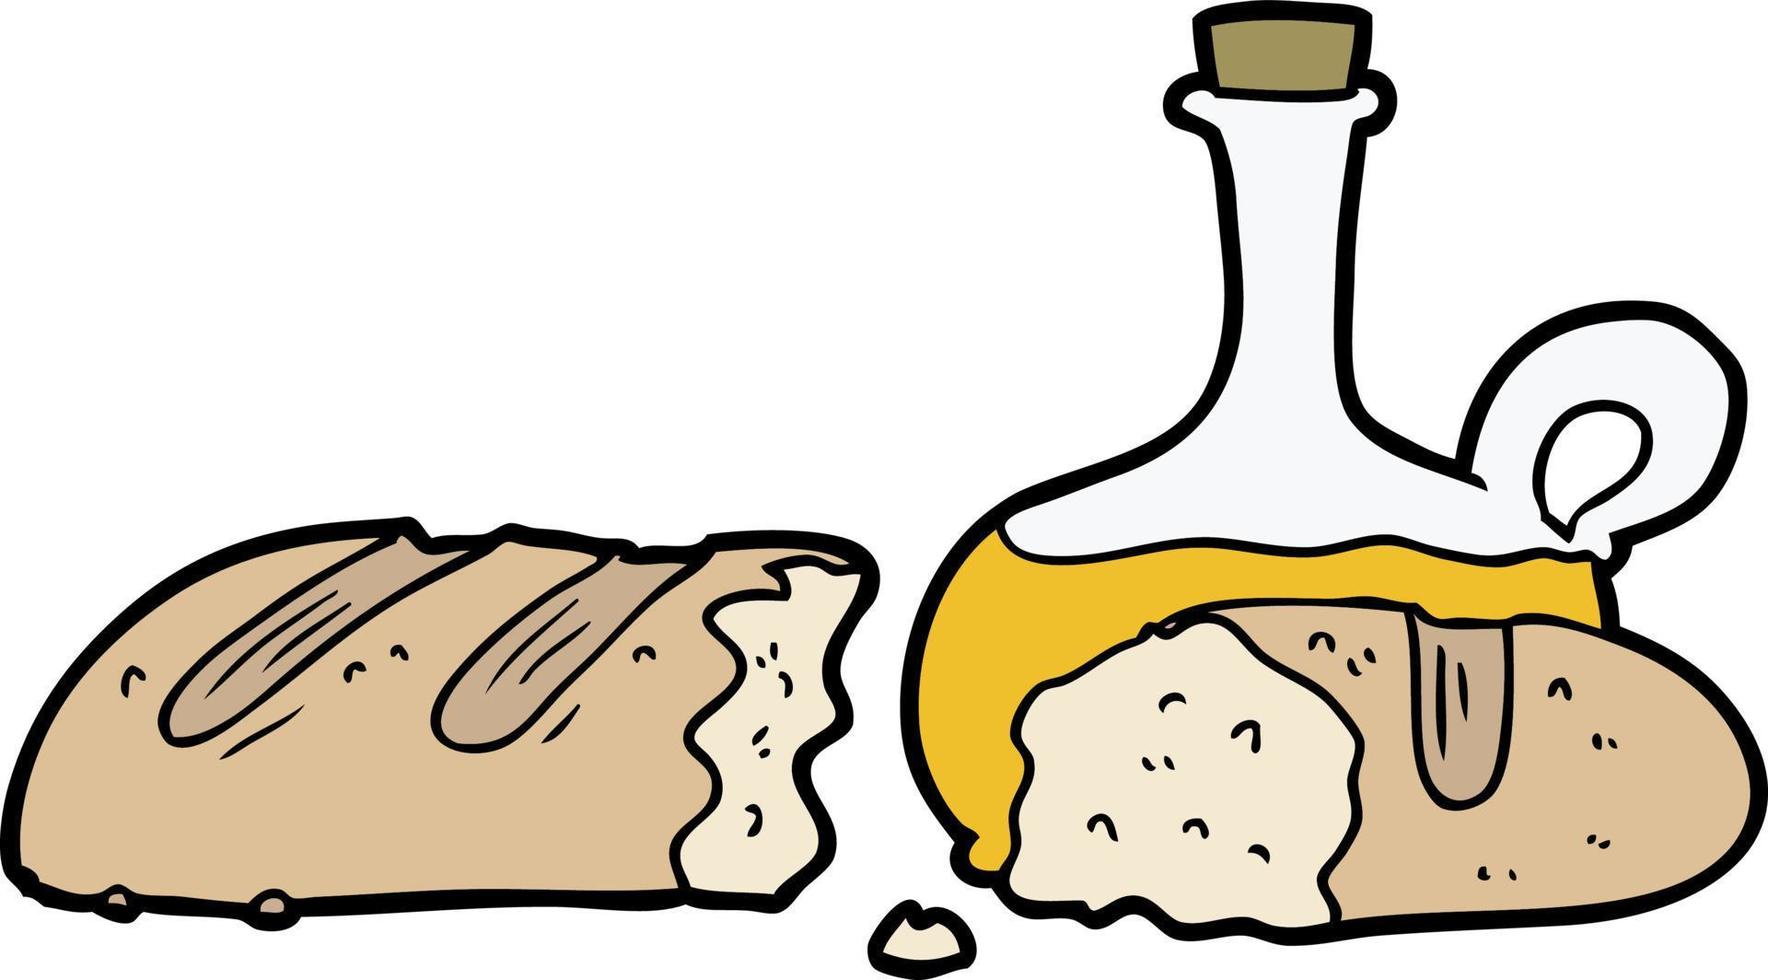 Cartoon cute bread and olive oil vector